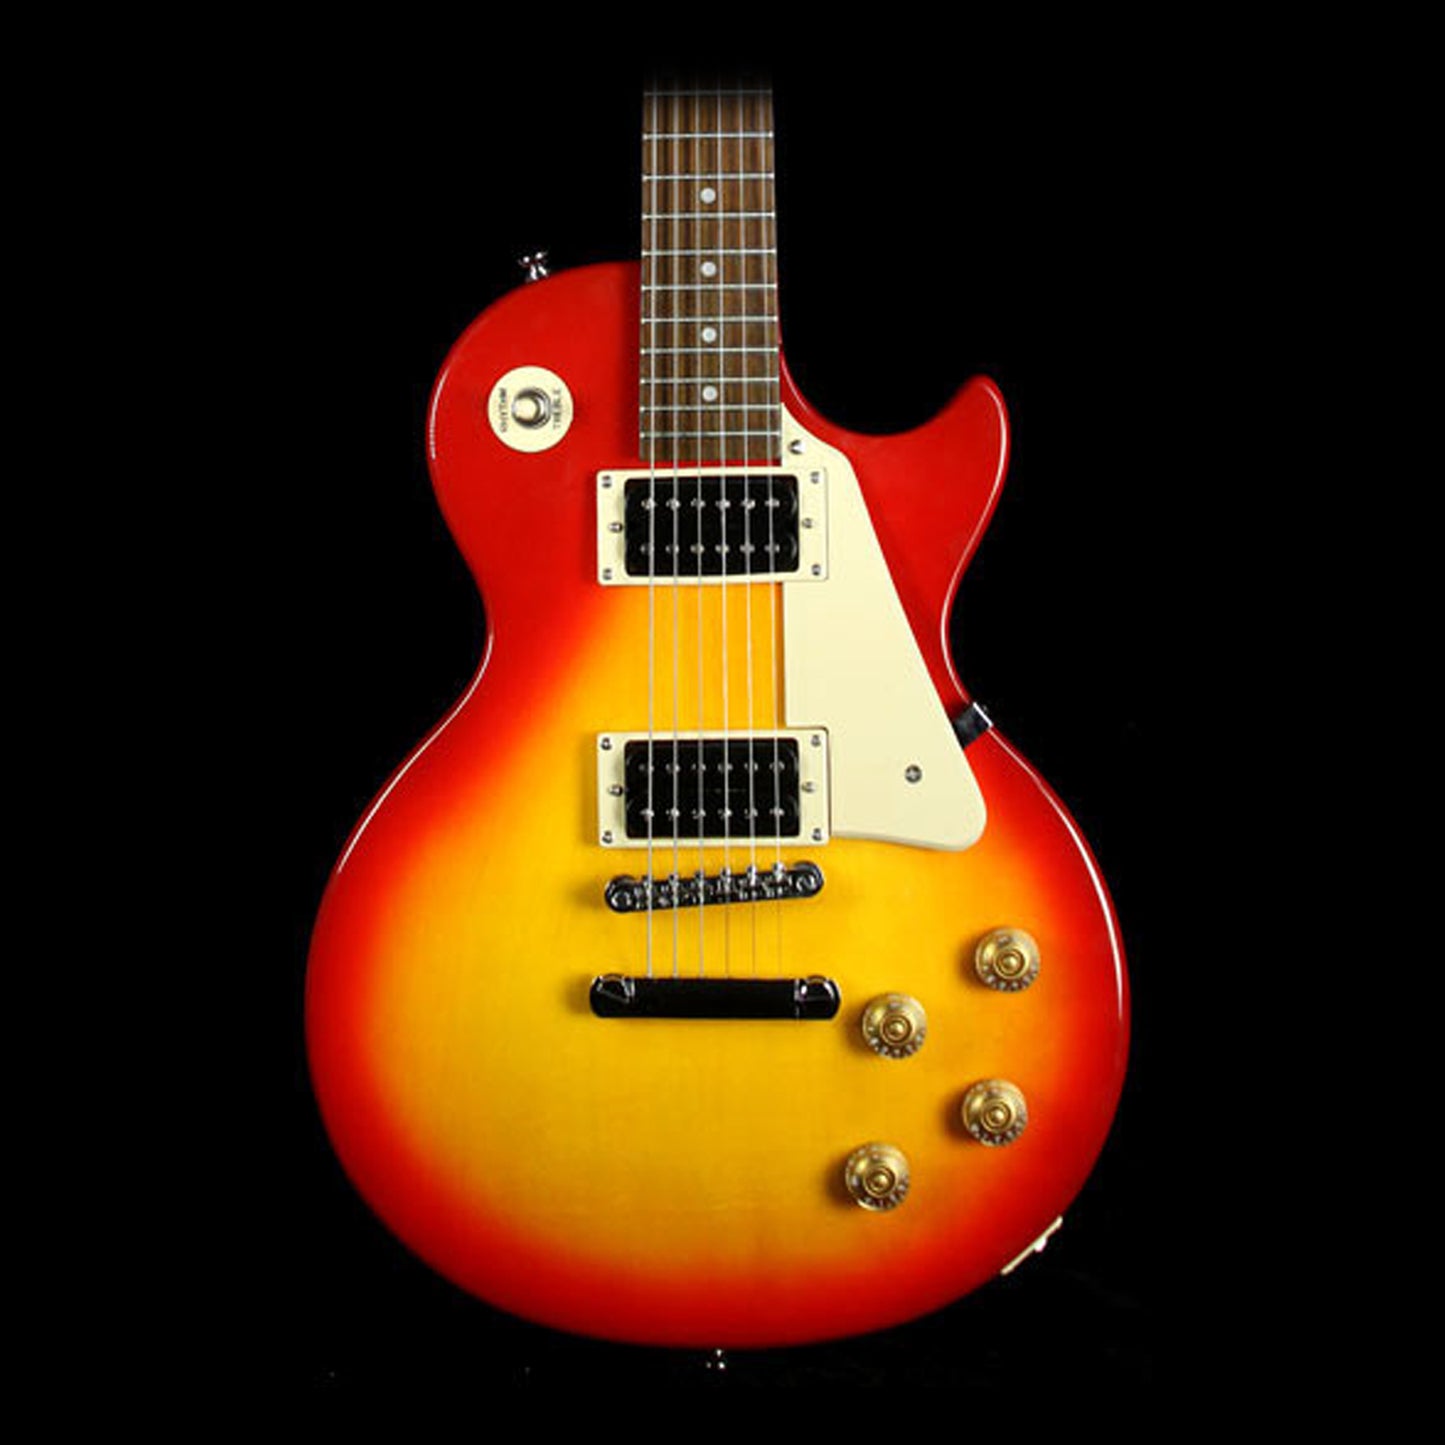 Epiphone Les Paul 100 Electric Guitar in Heritage Cherry Sunburst Finish